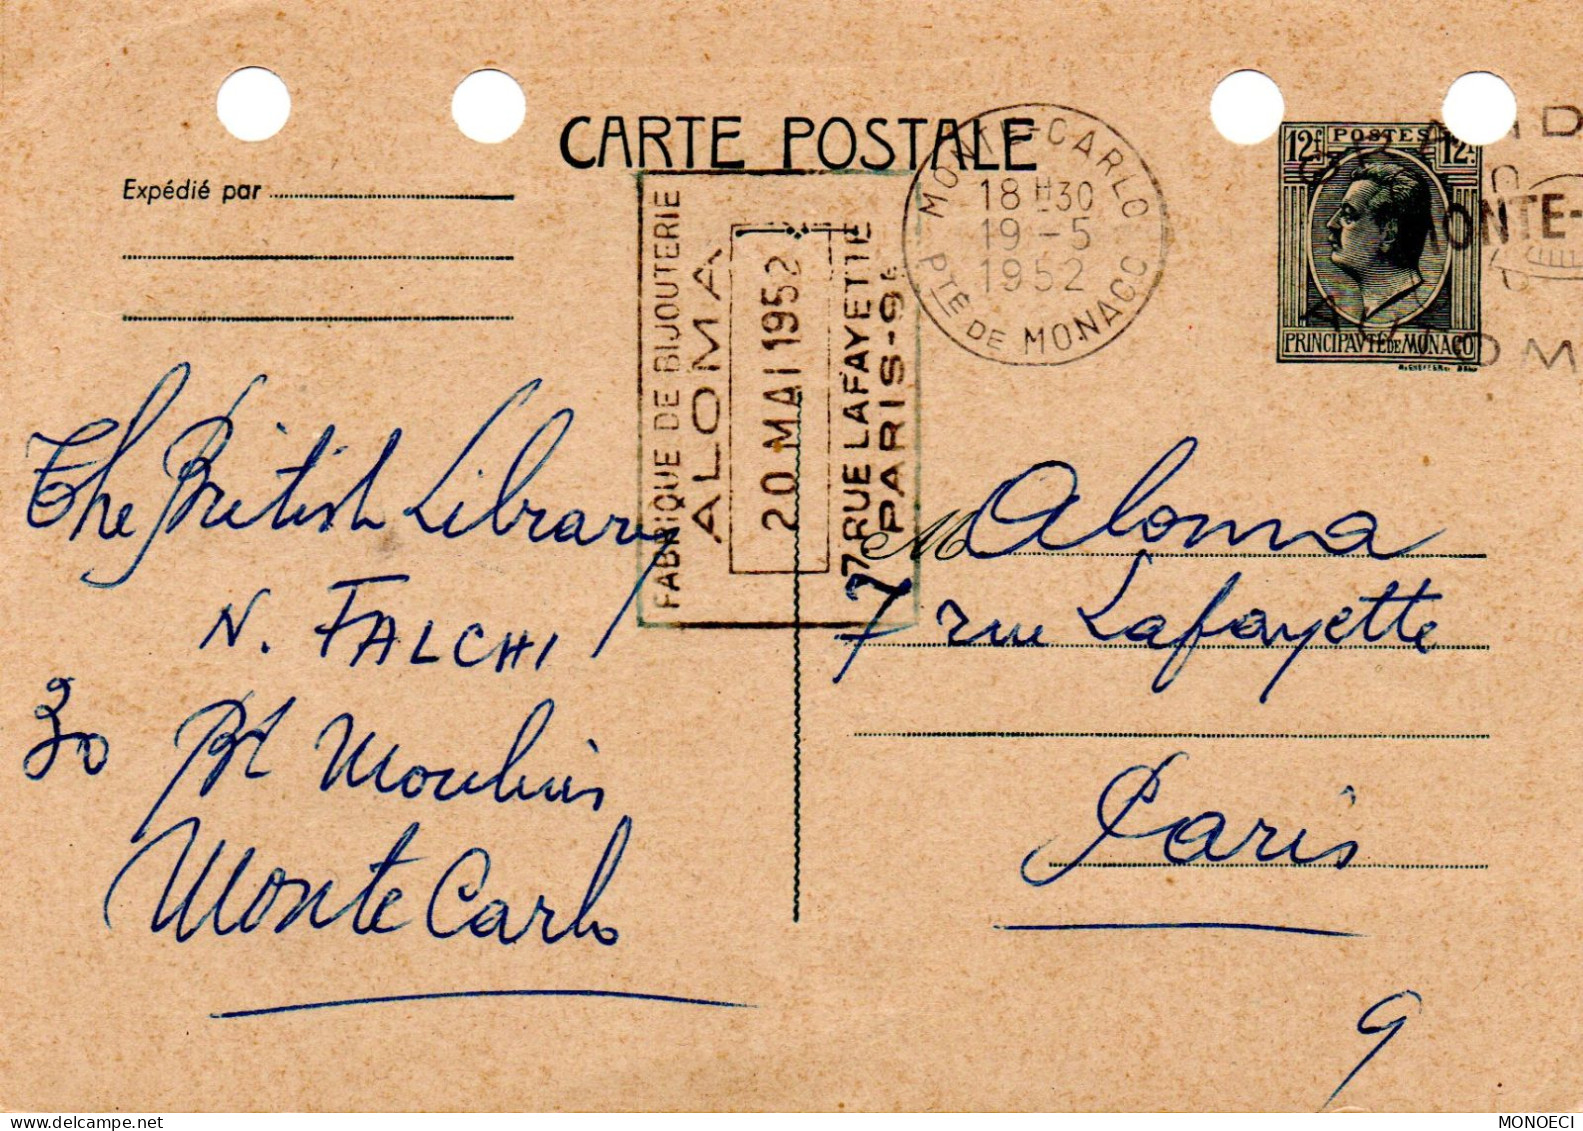 MONACO -- MONTE CARLO -- Entier Postal -- Carte Postale -- Prince Louis II -- 12 Francs Gris Vert Sur Chamois  (1949) - Postal Stationery